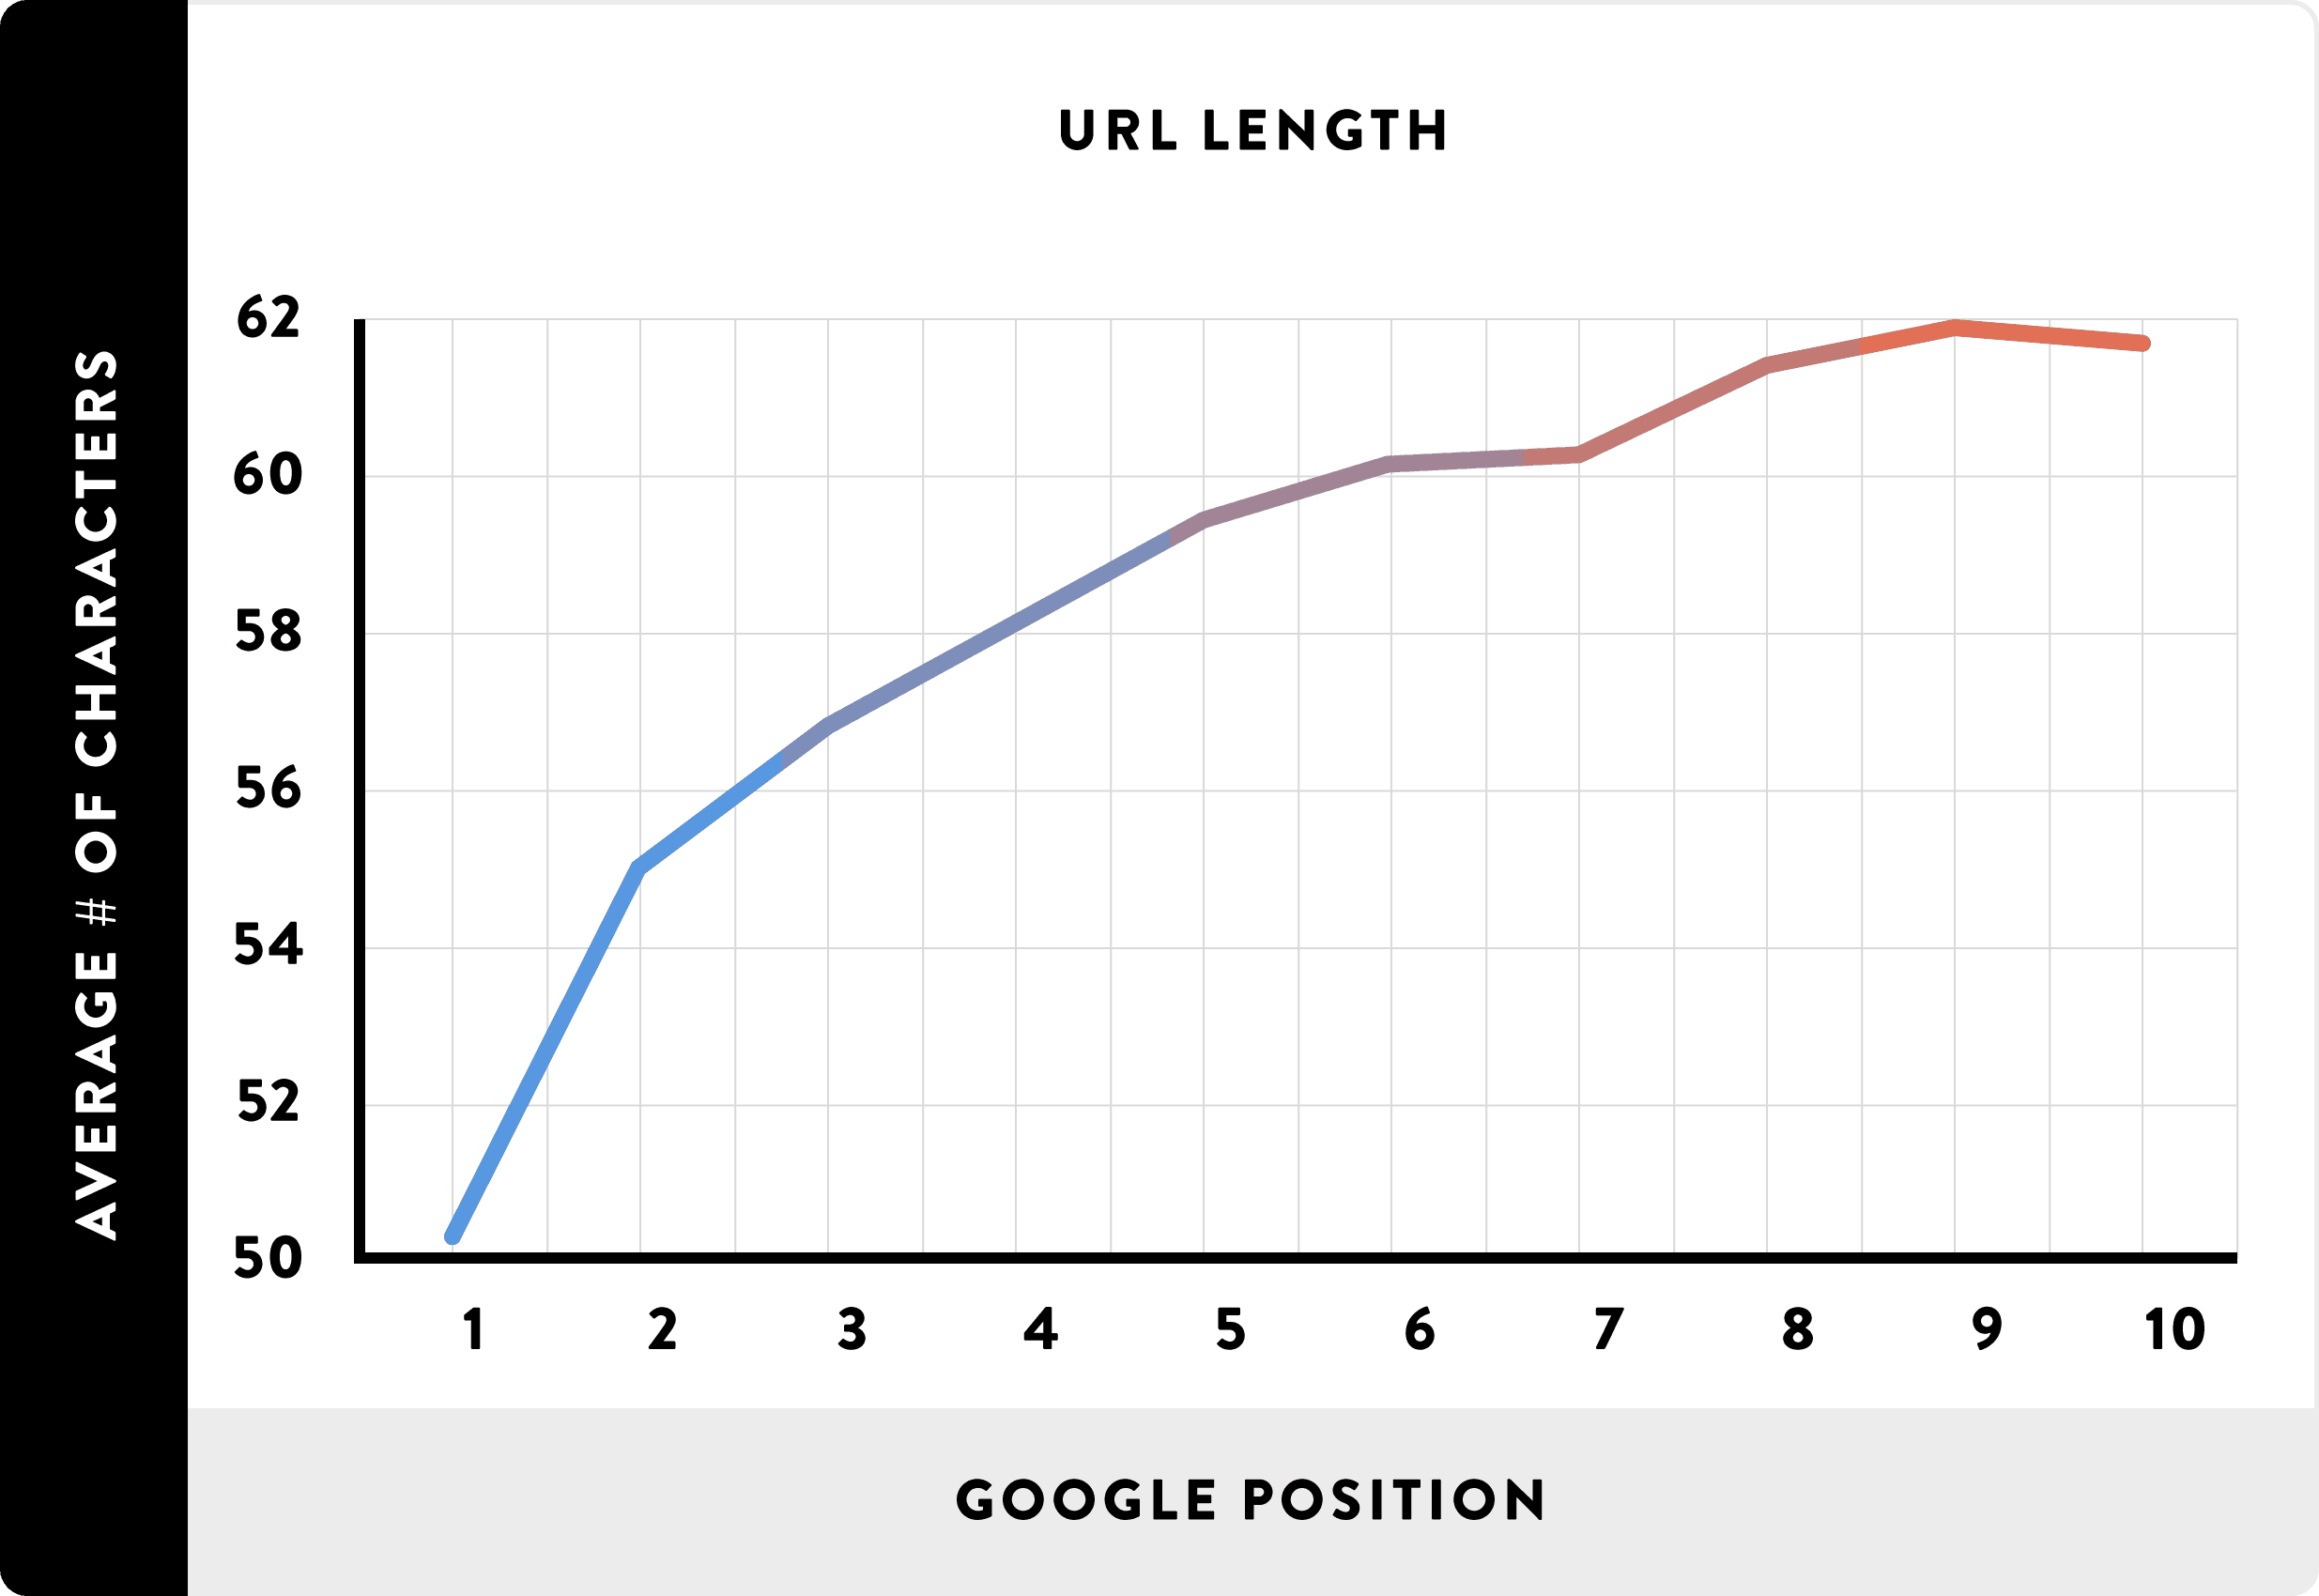 URL Length and Rankings